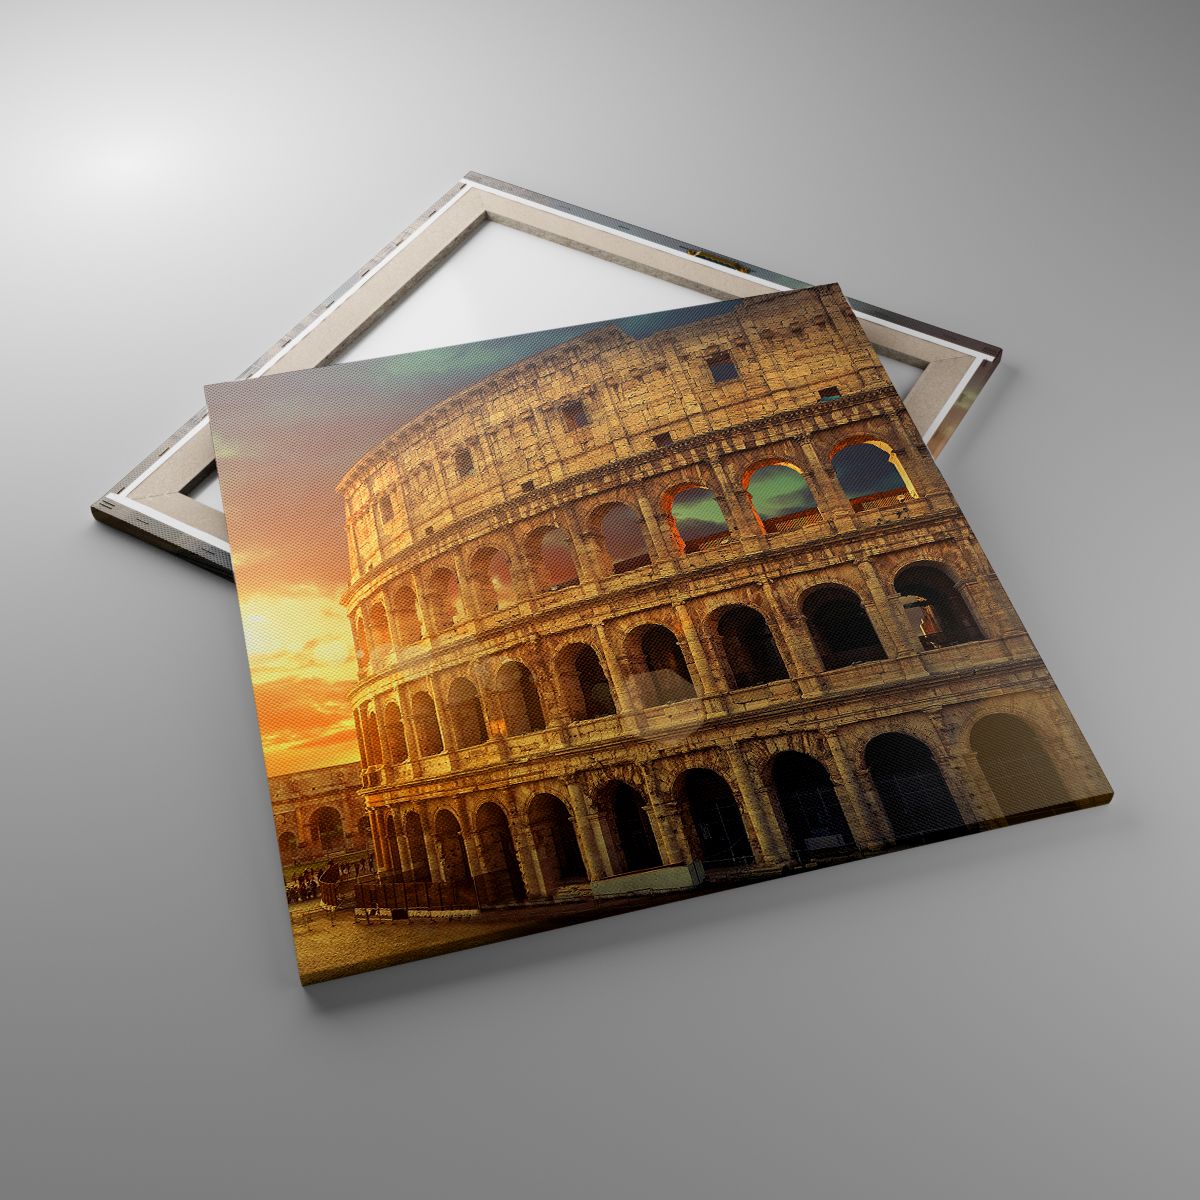 Obrazy Koloseum, Obrazy Rzym, Obrazy Architektura, Obrazy Włochy, Obrazy Kultura